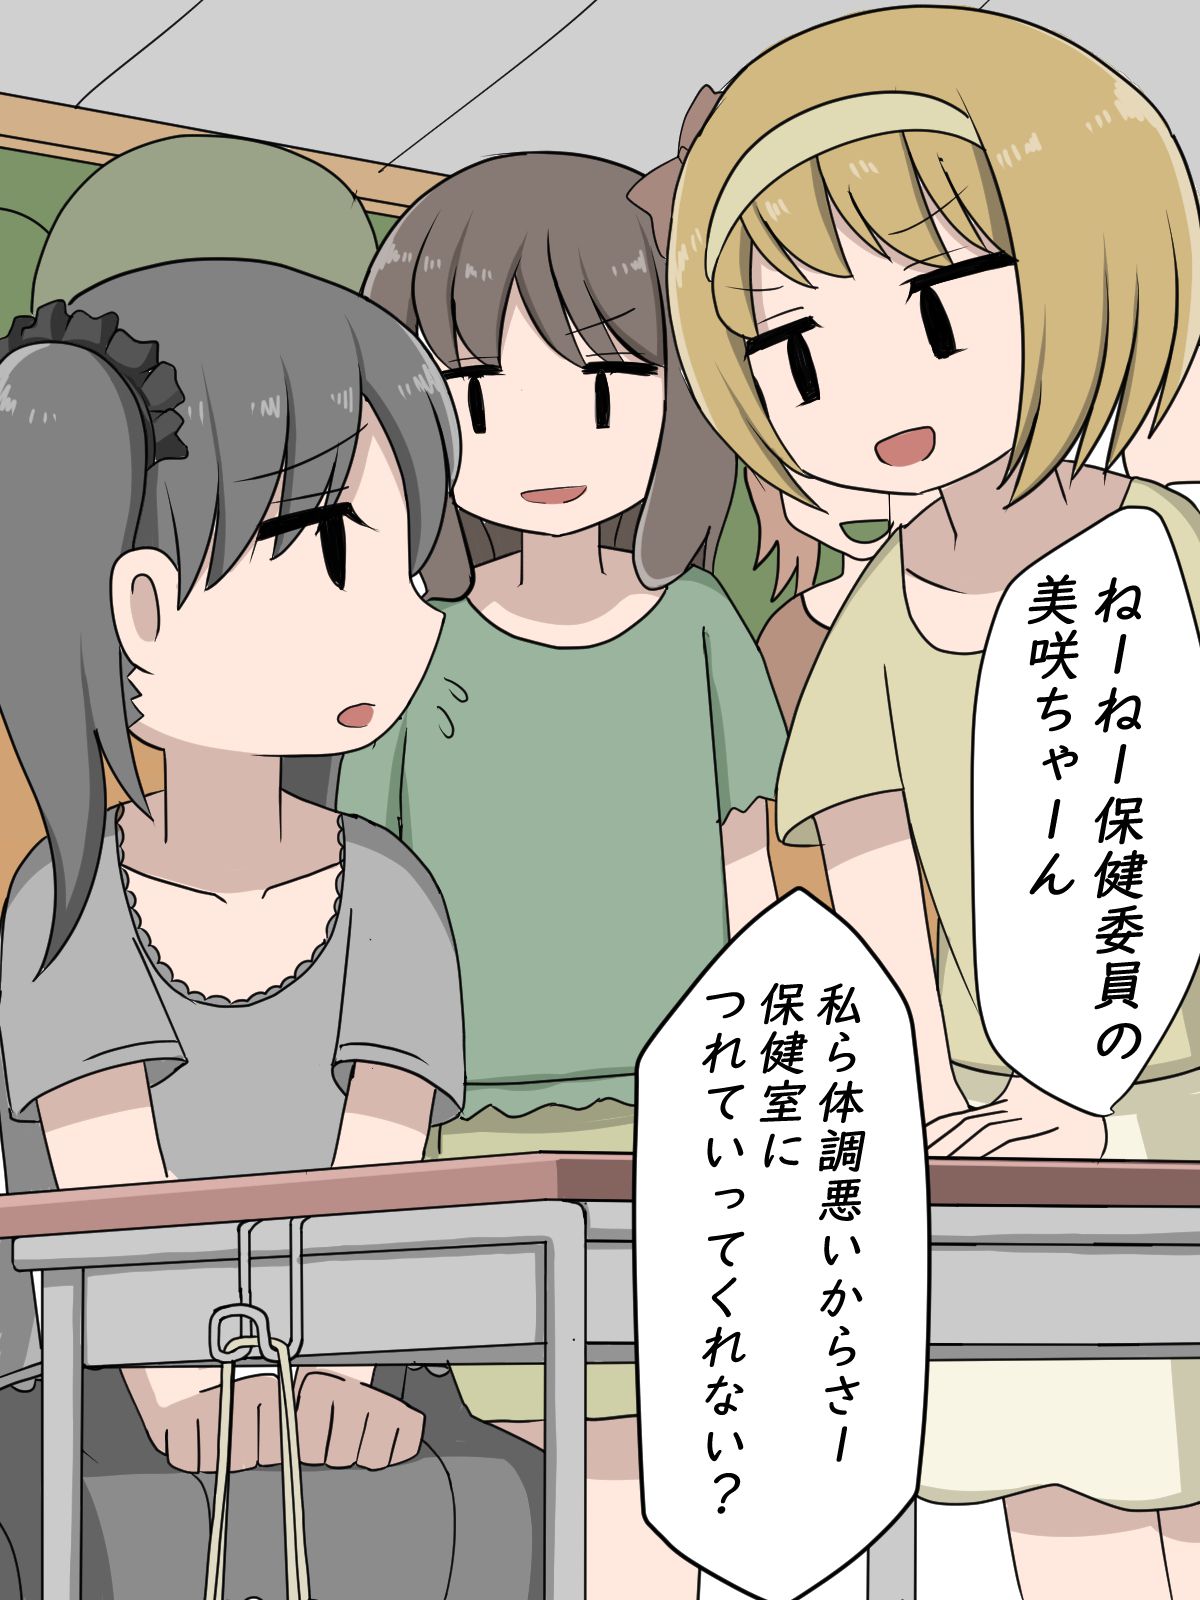 [Image] JK-san plays pranks with other women during recess 11